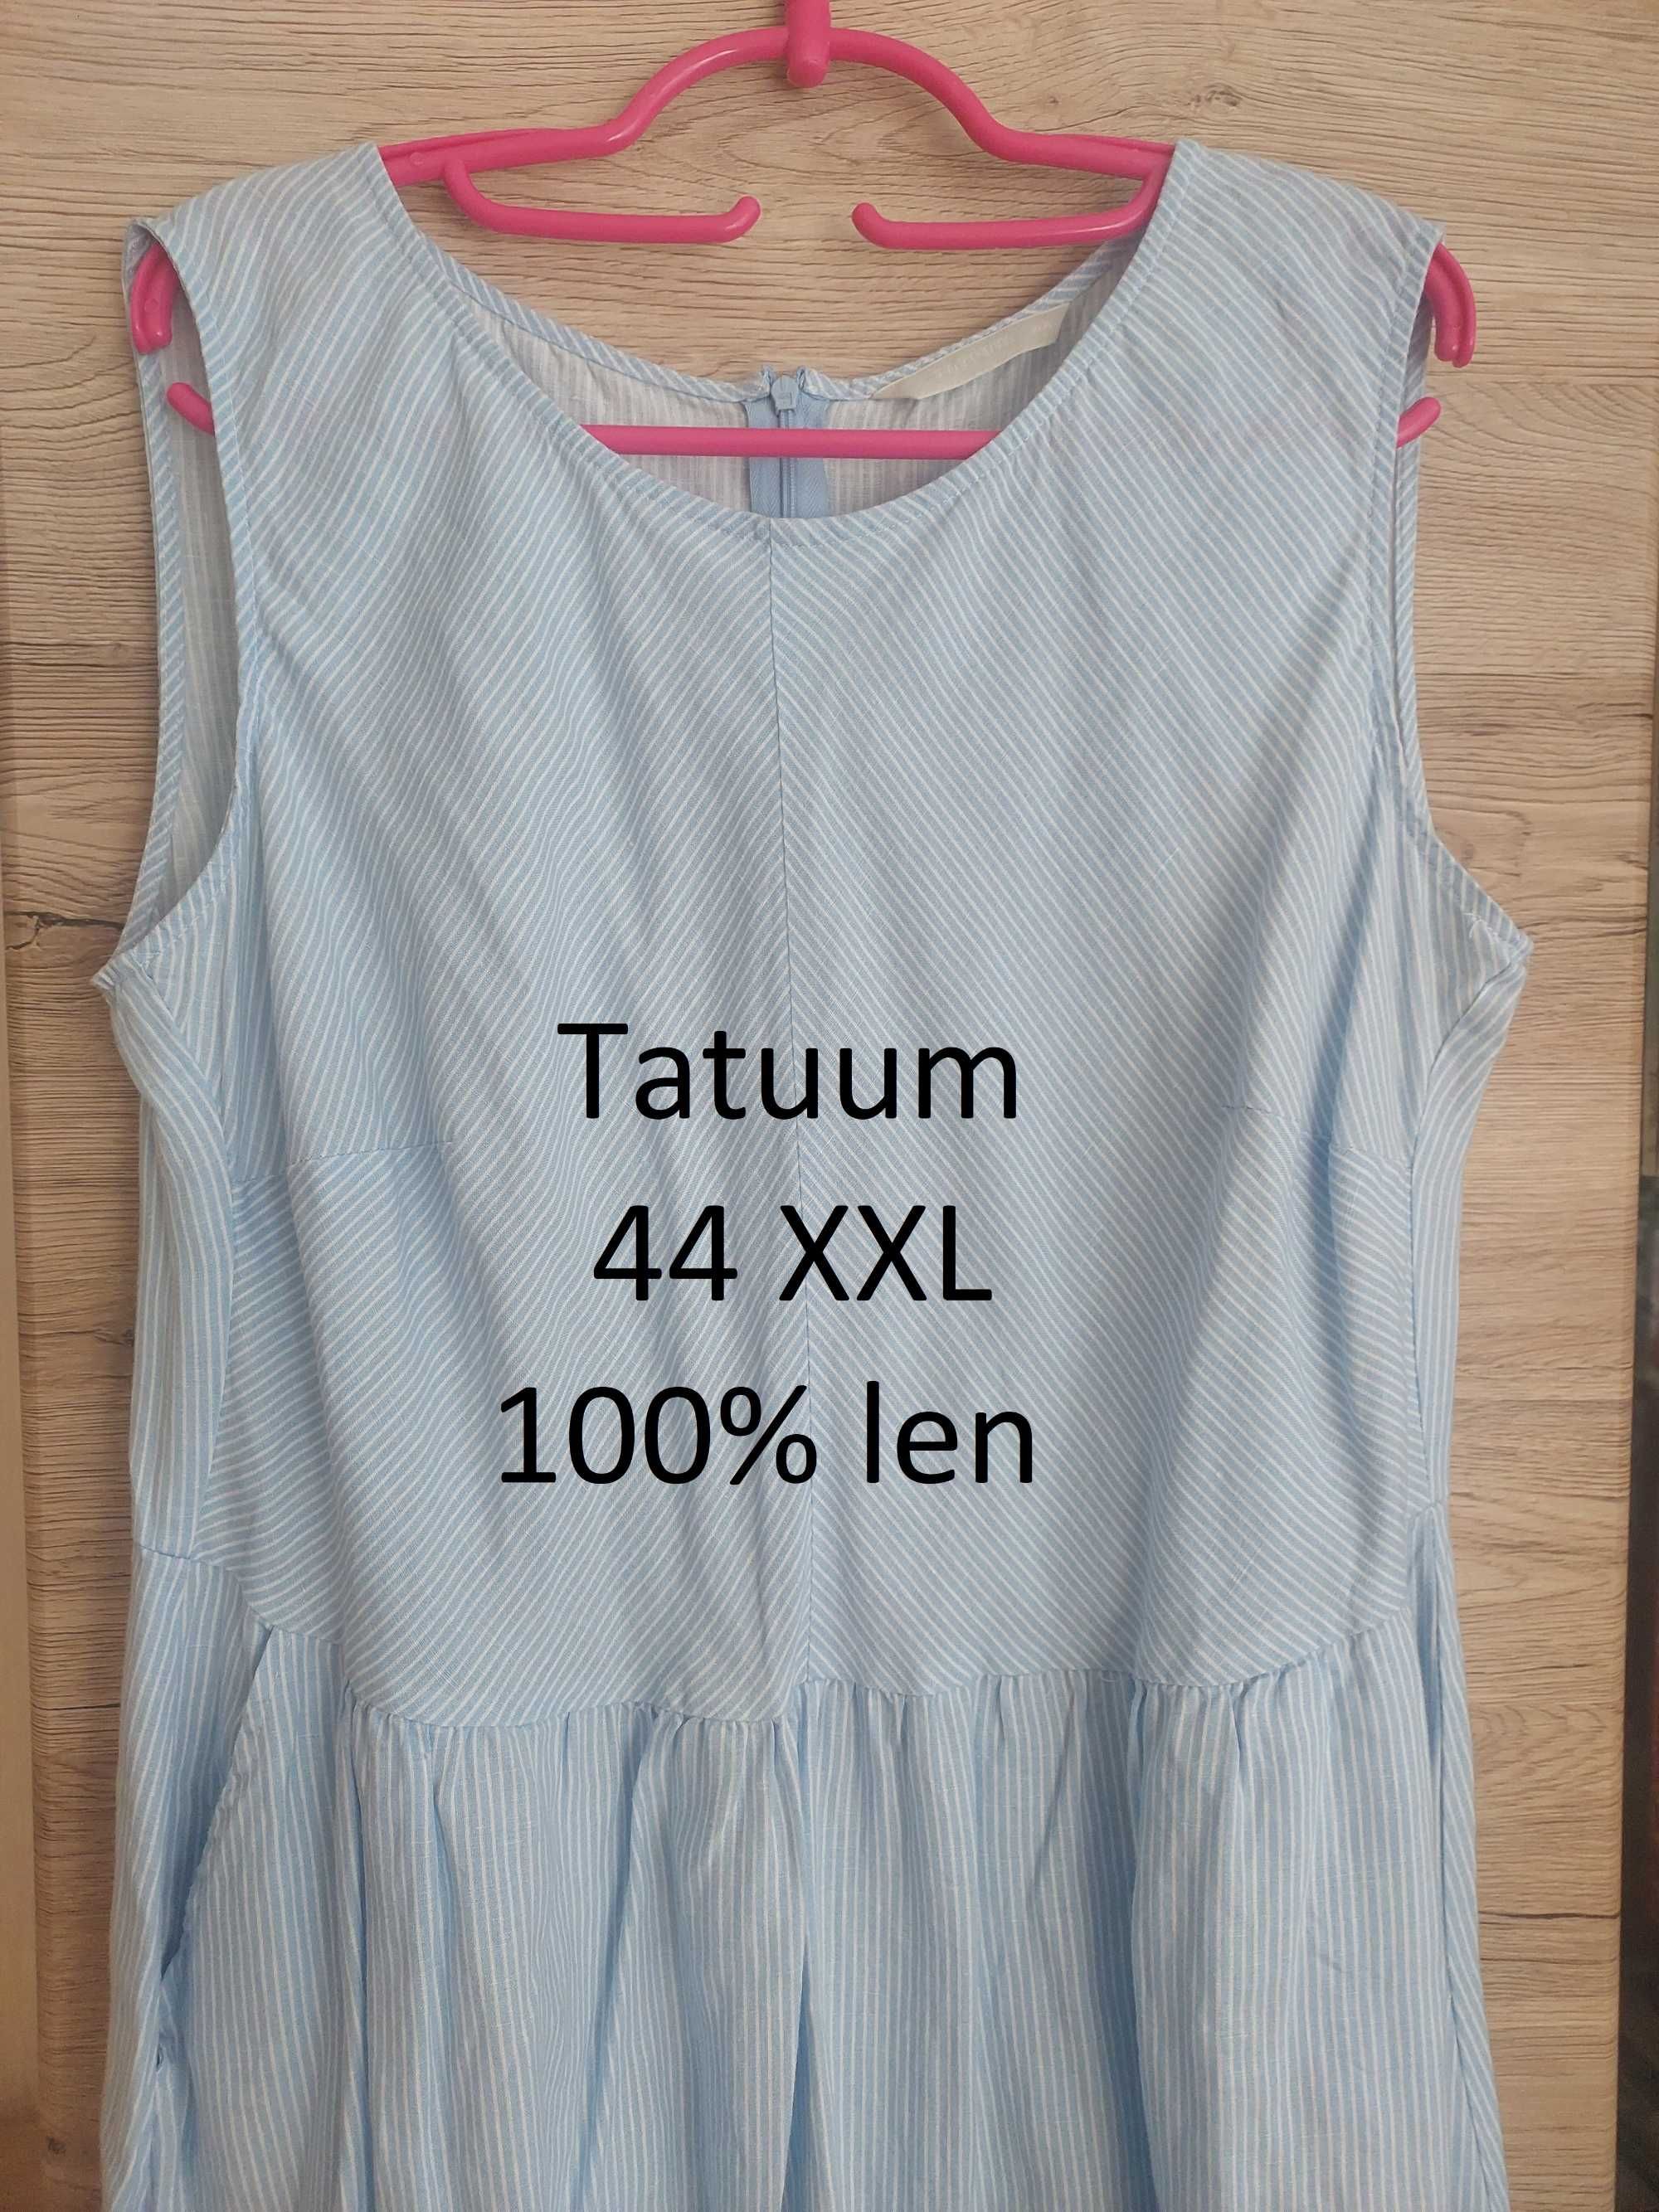 44 XXL Tatuum 100% len piękna lniana sukienka idealna